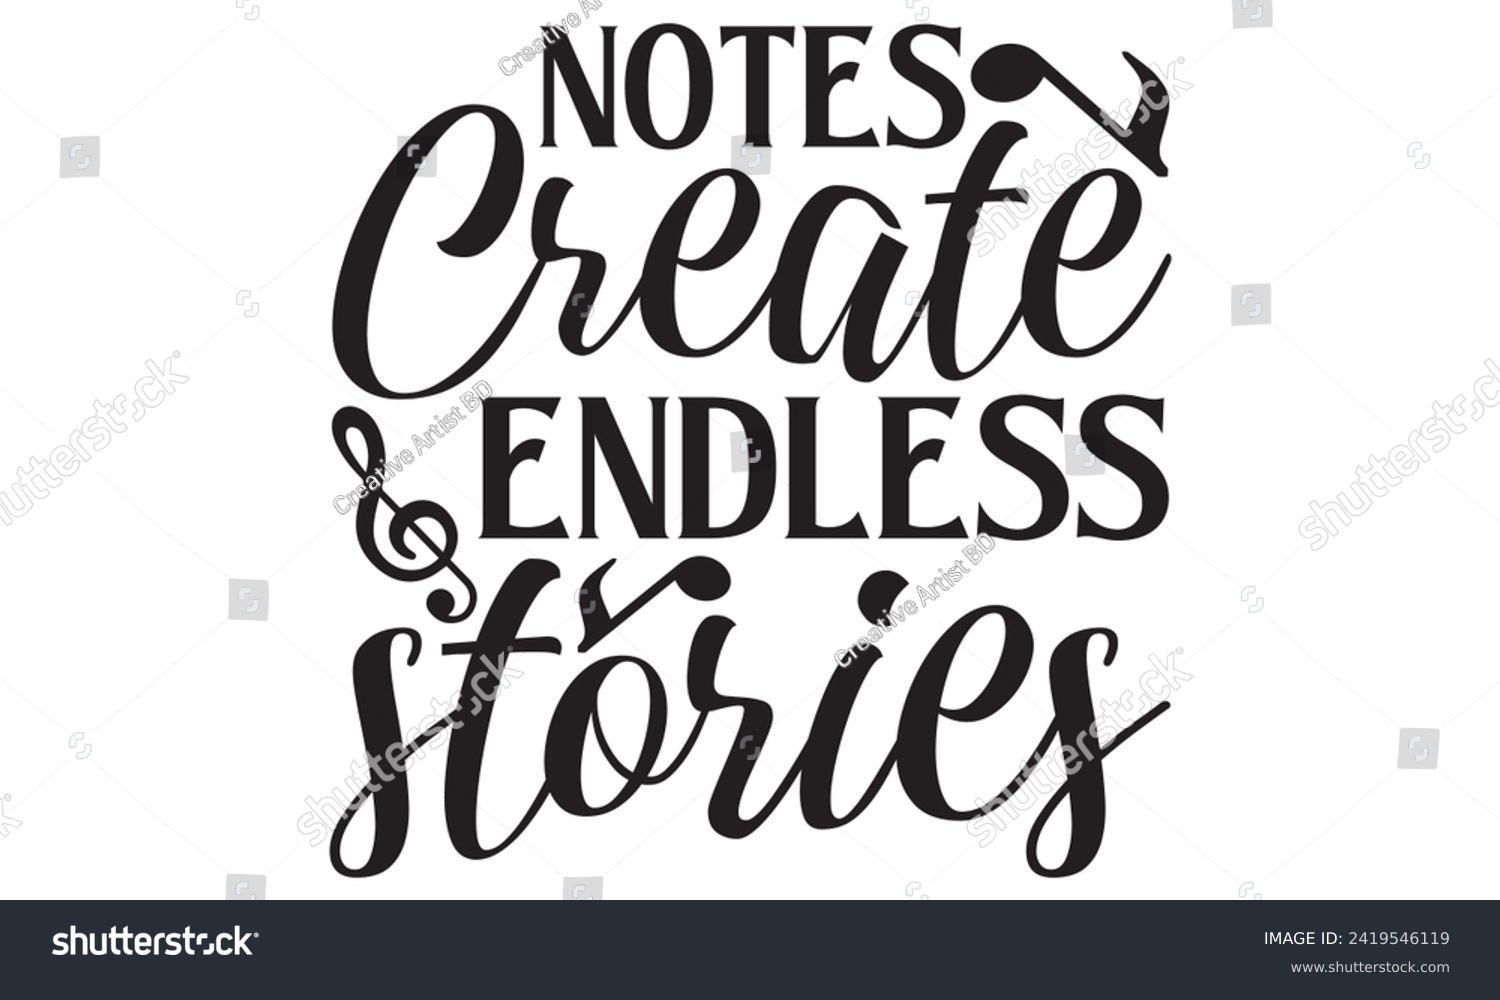 SVG of Notes Create Endless Stories - Singer T shirt Design, Handmade calligraphy vector illustration, Typography Vector for poster, banner, flyer and mug. svg